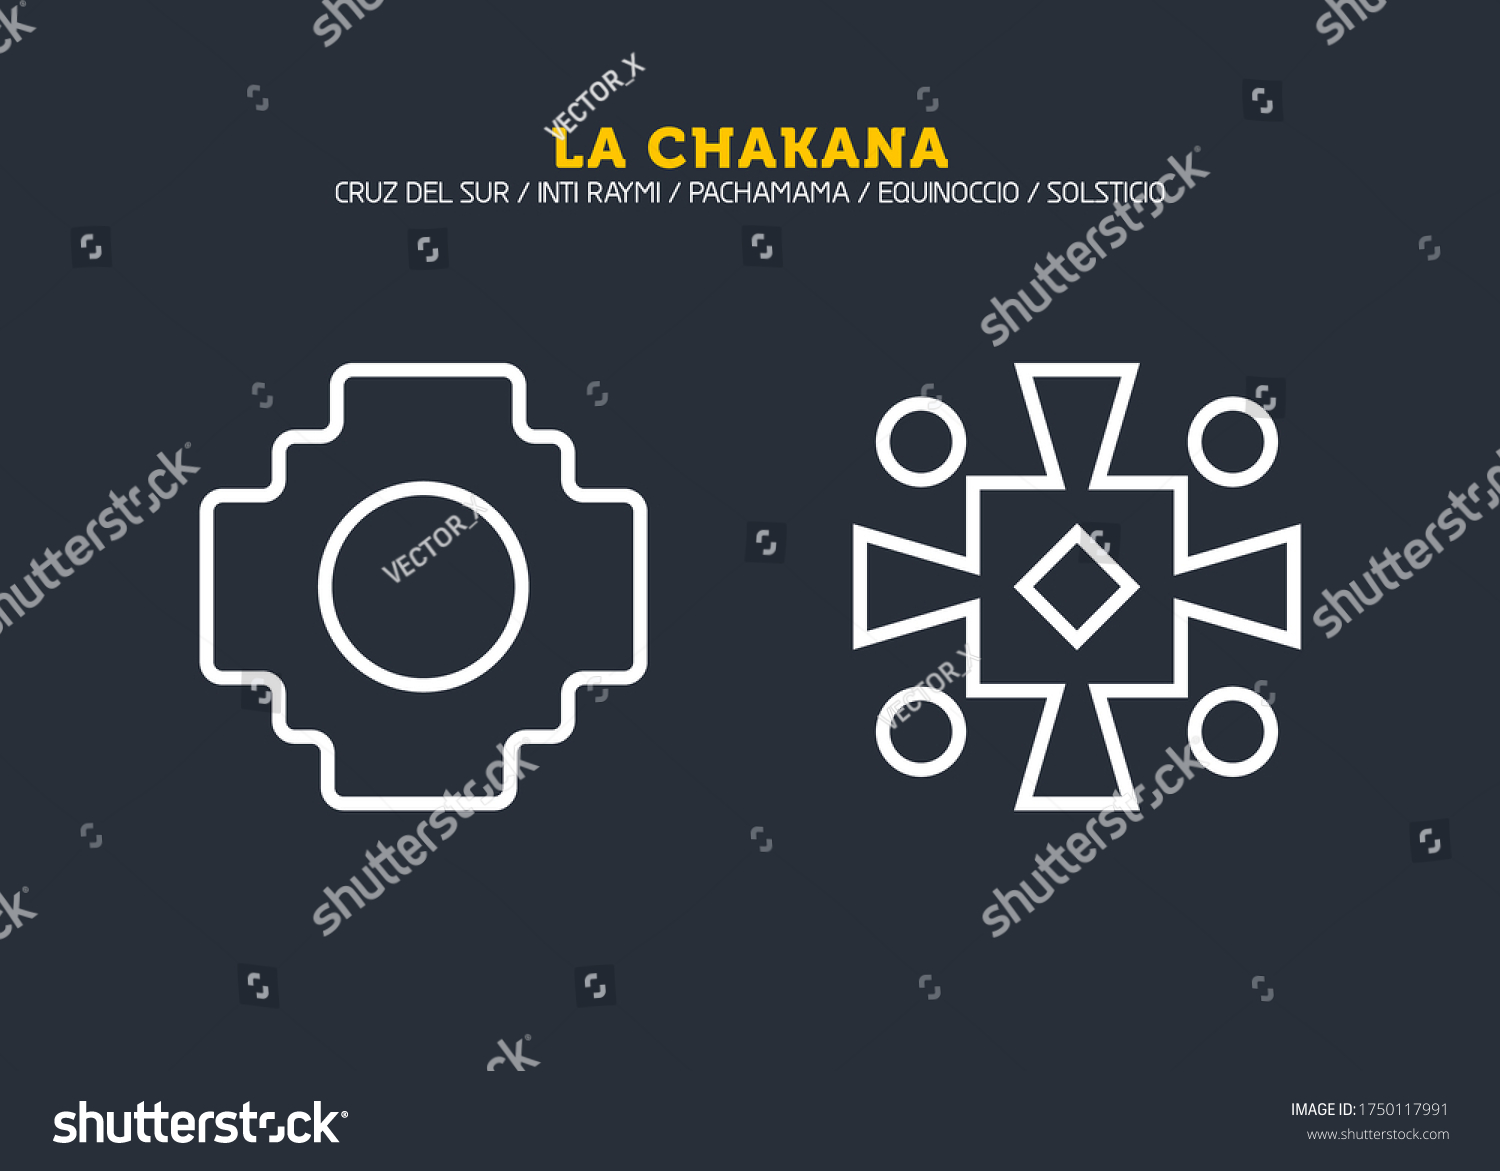 Inca Cross Chakana, Inti Raymi Ecuador, Peru - Royalty Free Stock ...